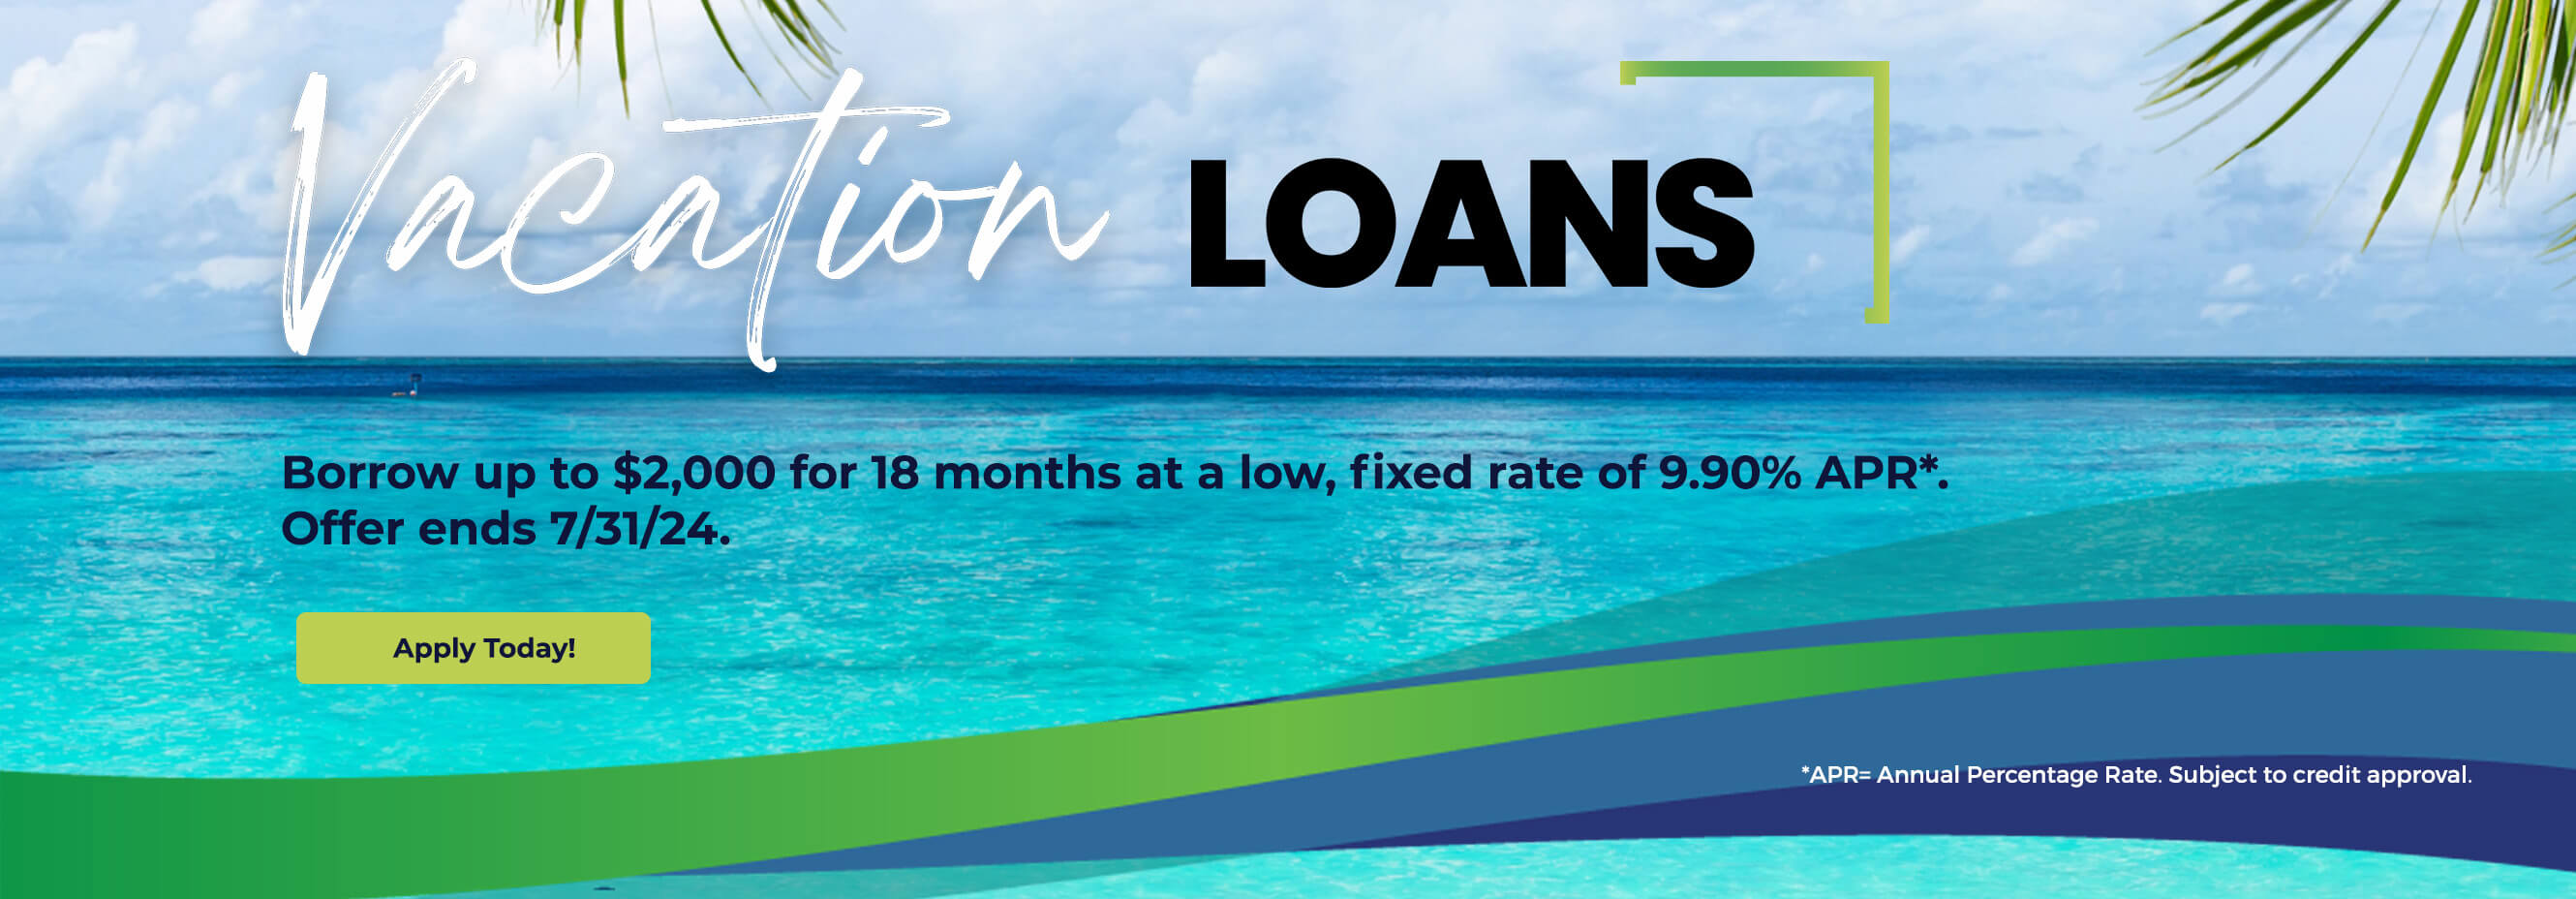 Vacation Loans 24